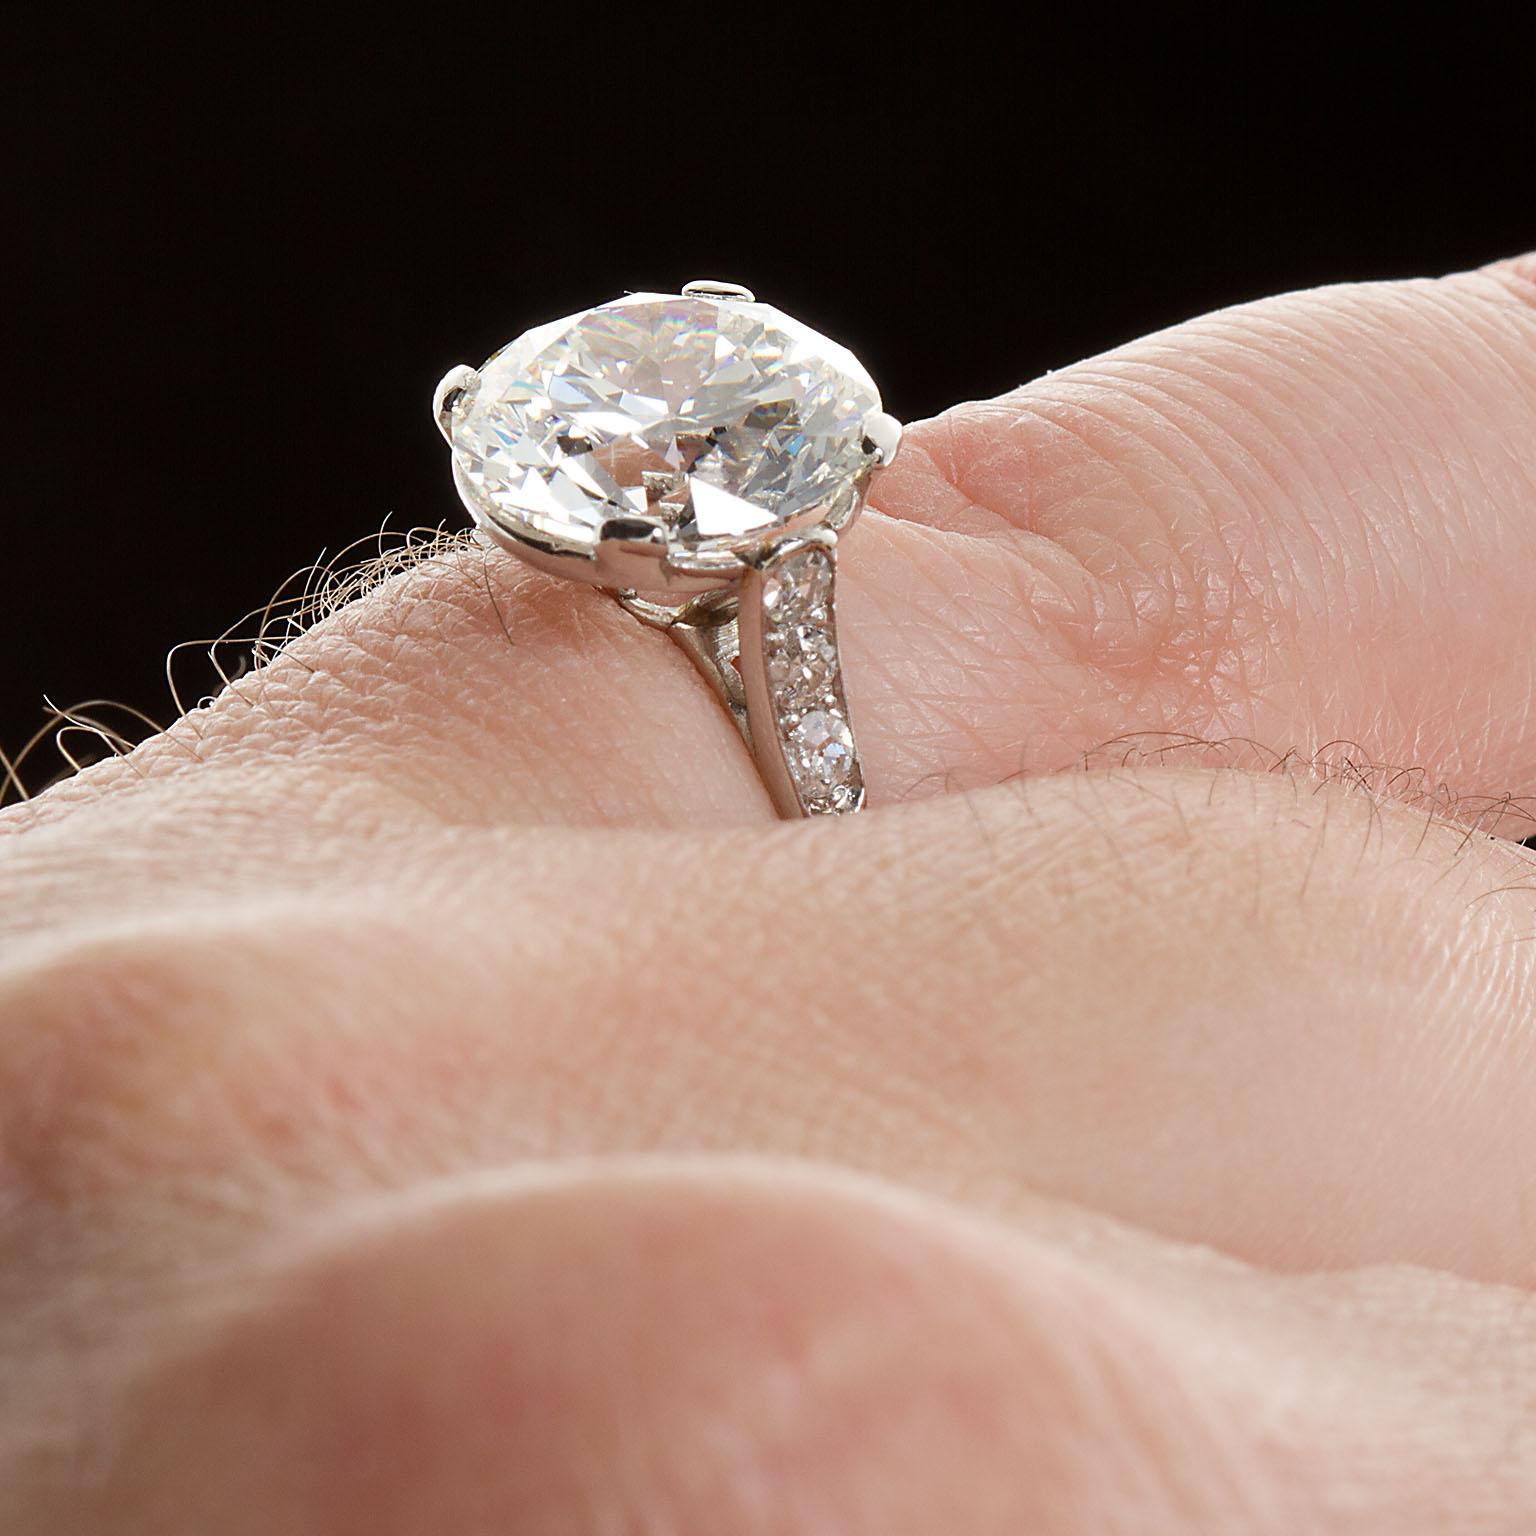 Cartier Paris Round Brilliant Diamond Engagement Ring 4.41 Carat White Gold GIA 9